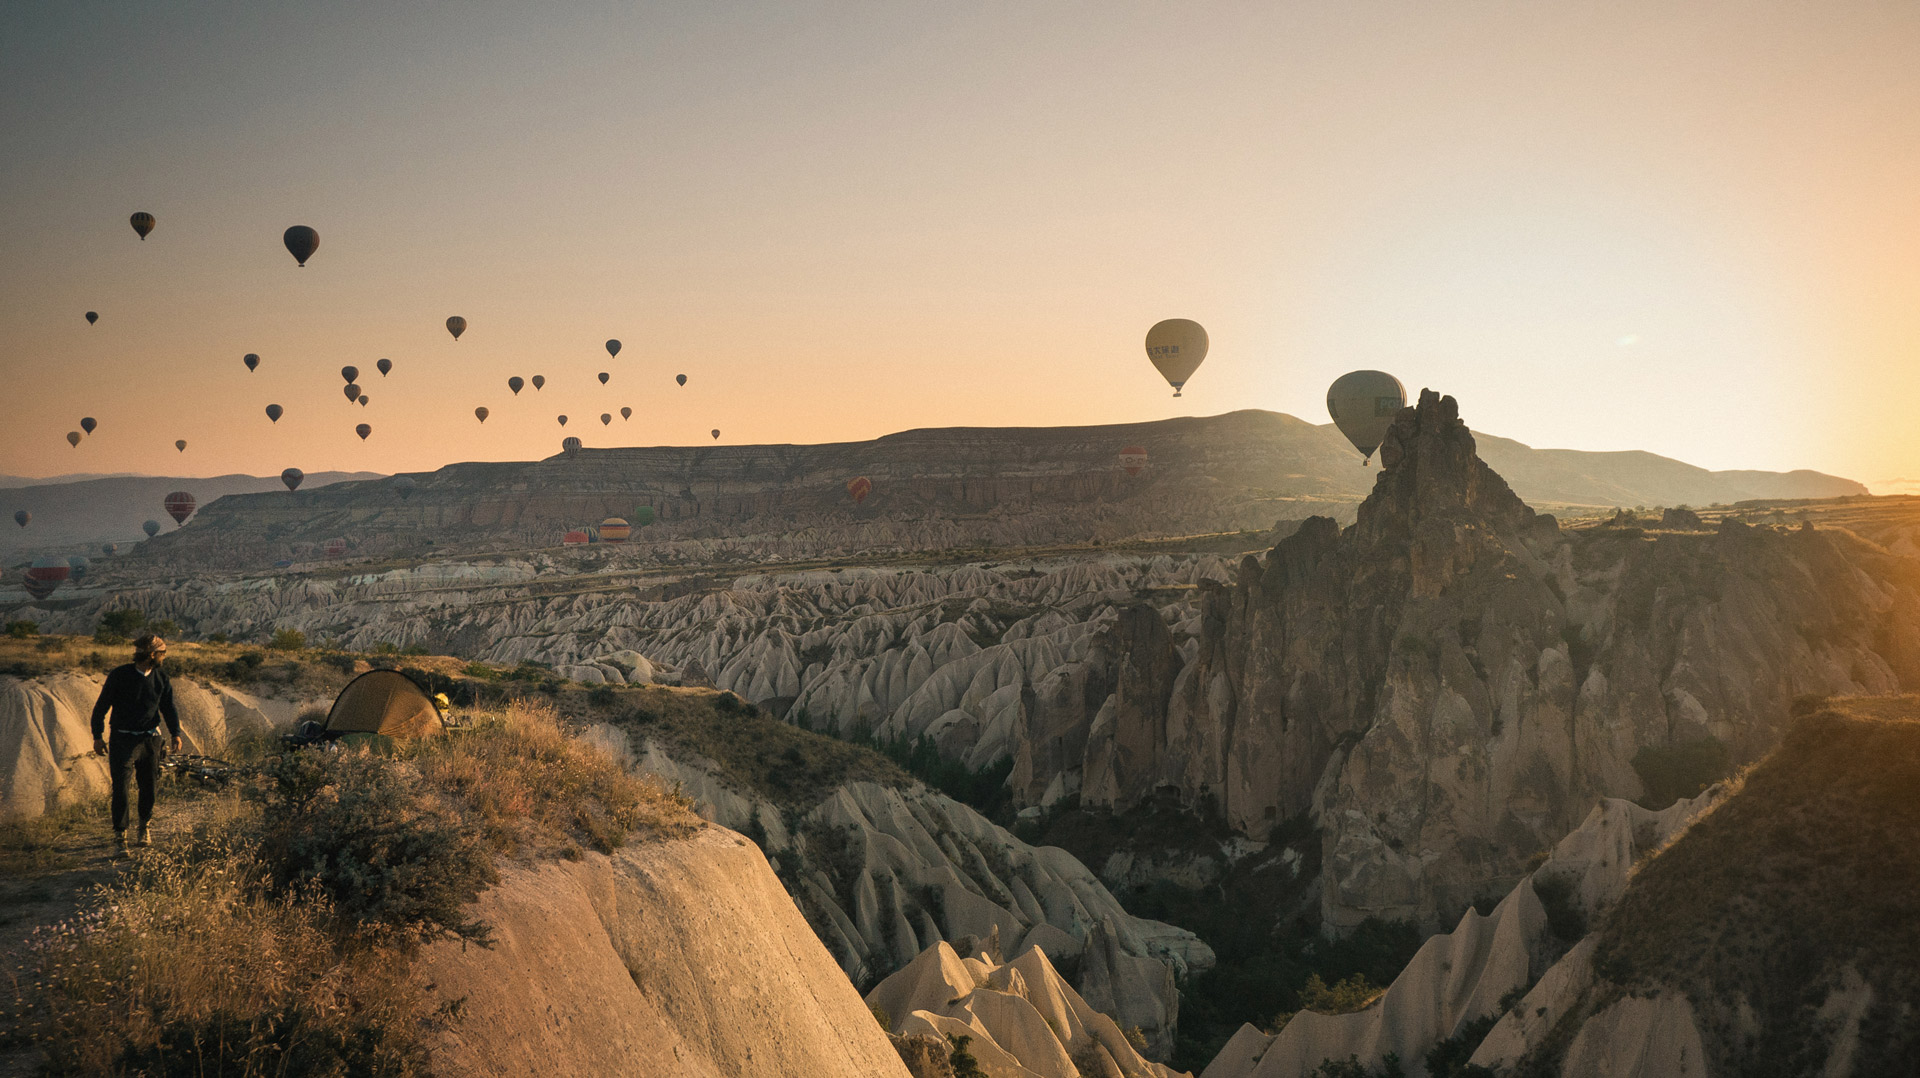 Hot air balloons in Turkey by Martijn Doolaard, from One Year on a Bike, Copyright Gestalten 2017